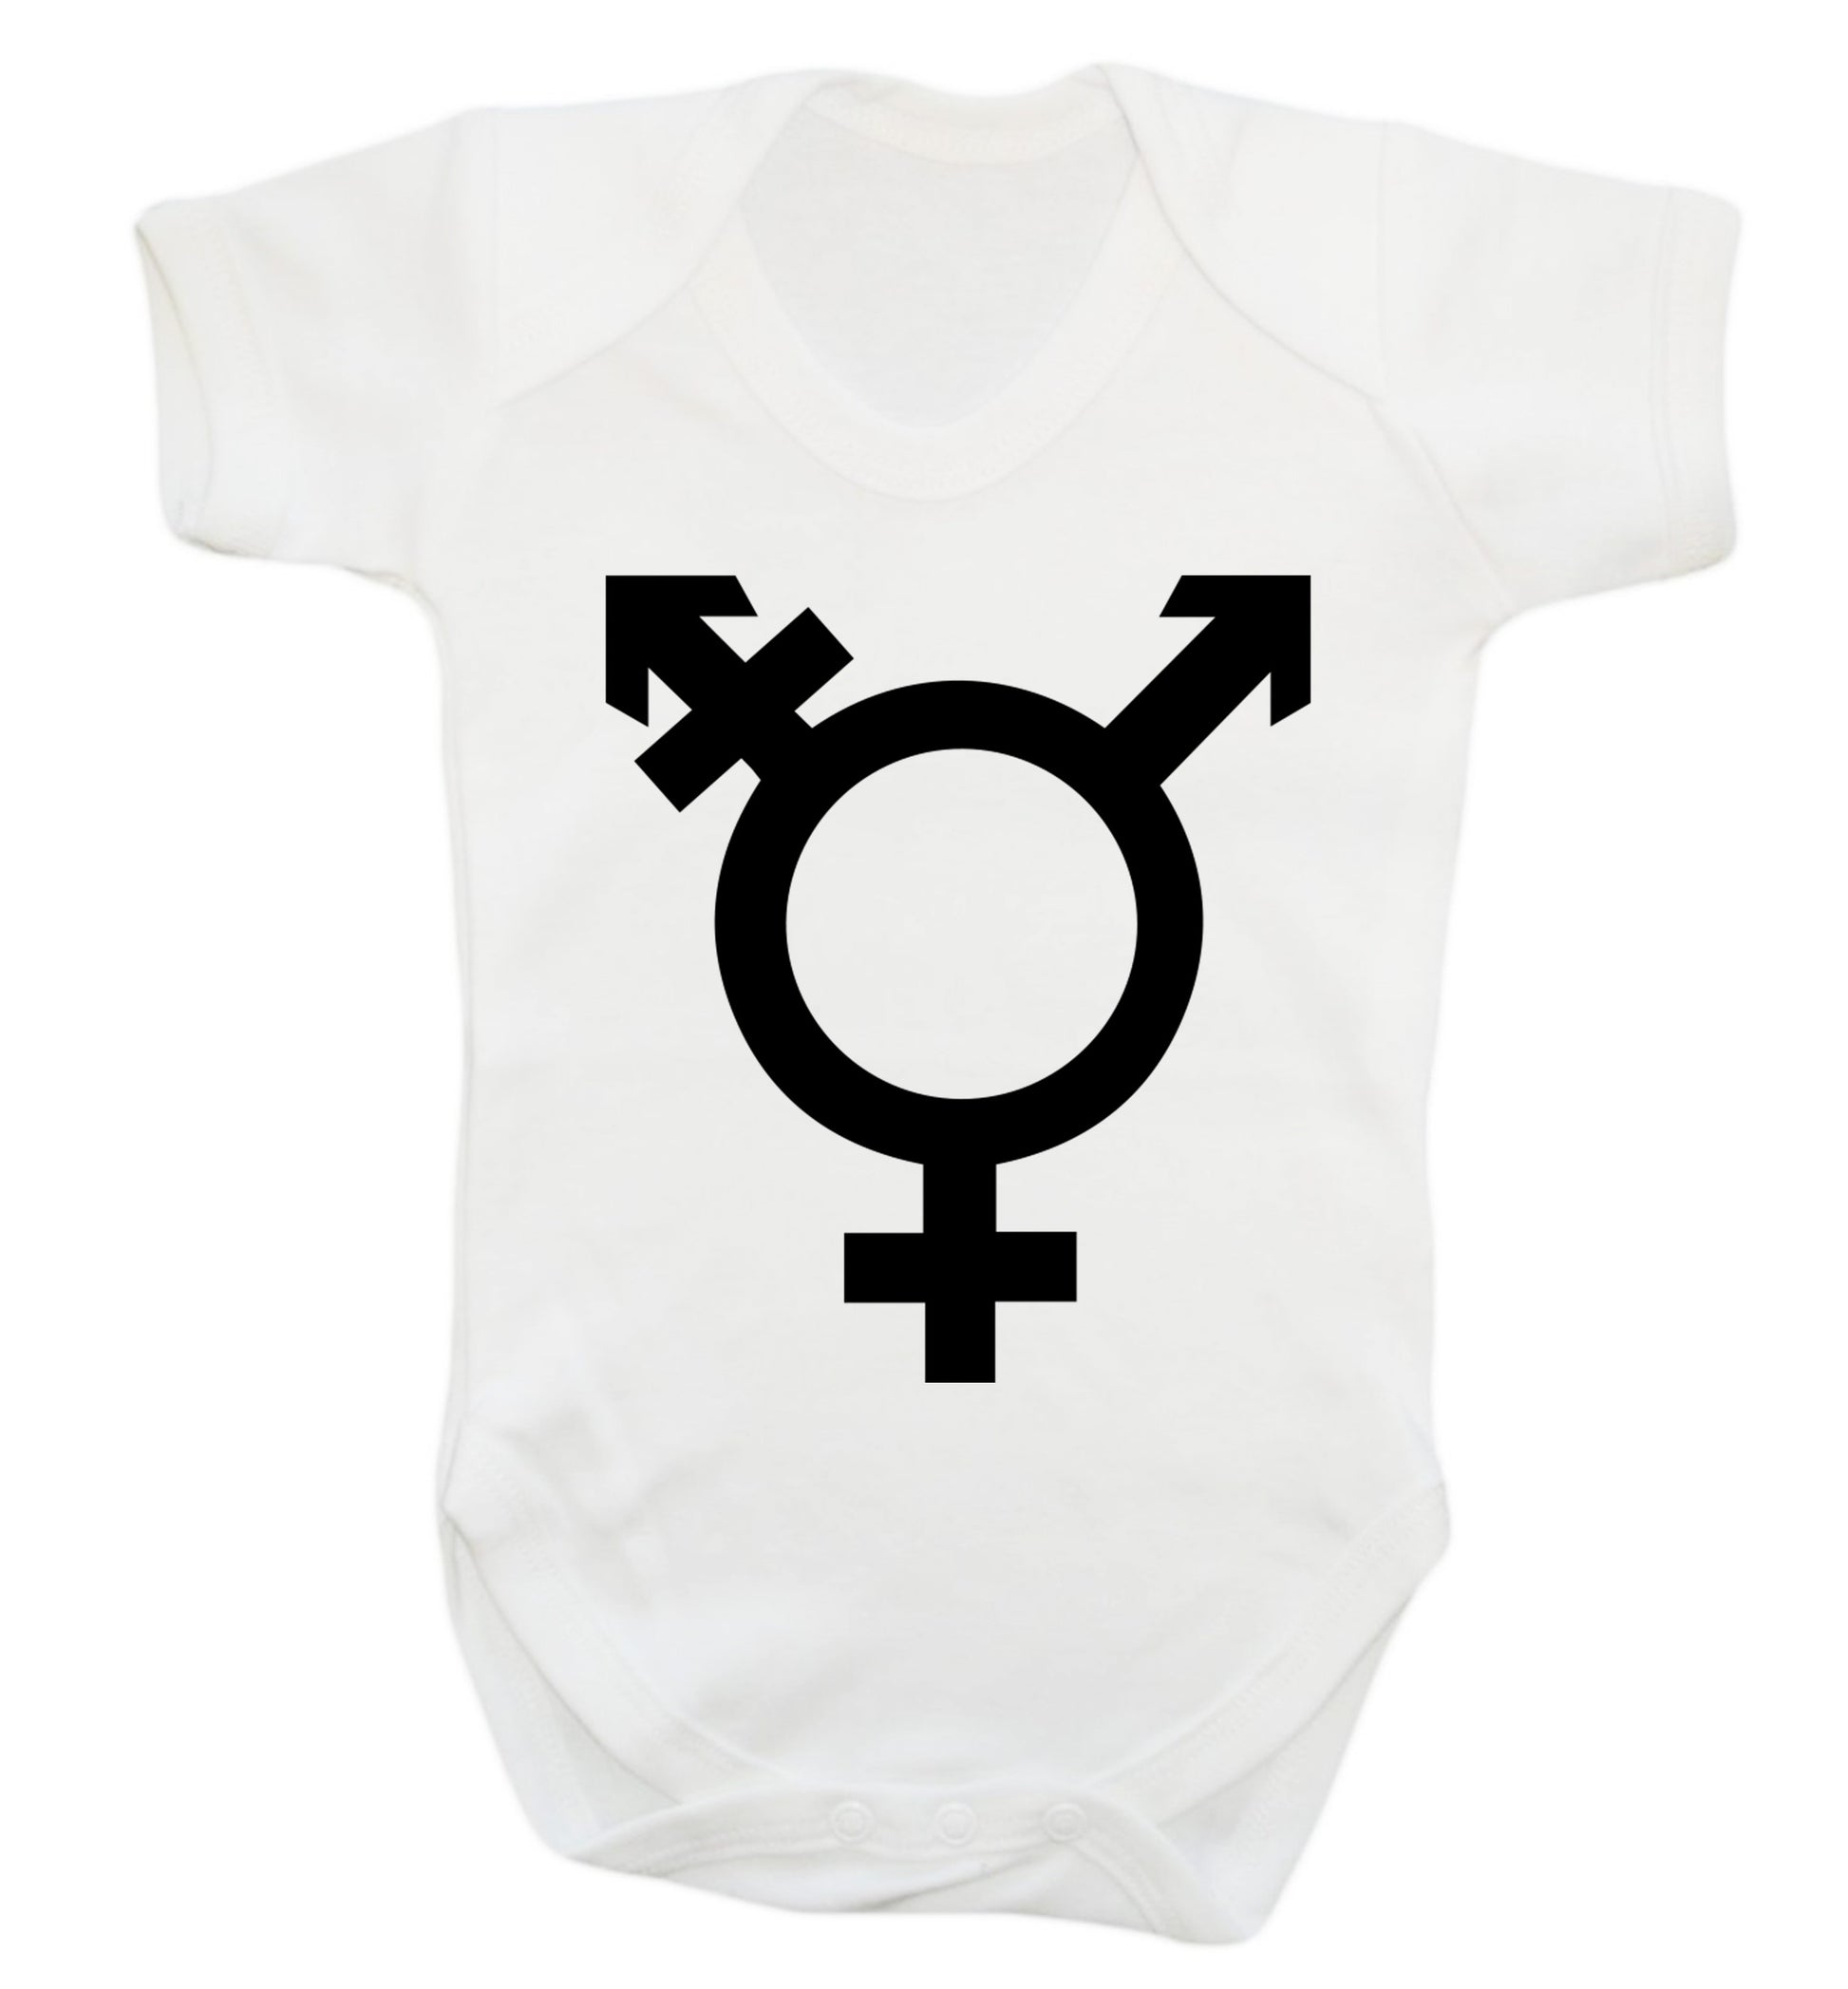 Gender neutral symbol large Baby Vest white 18-24 months